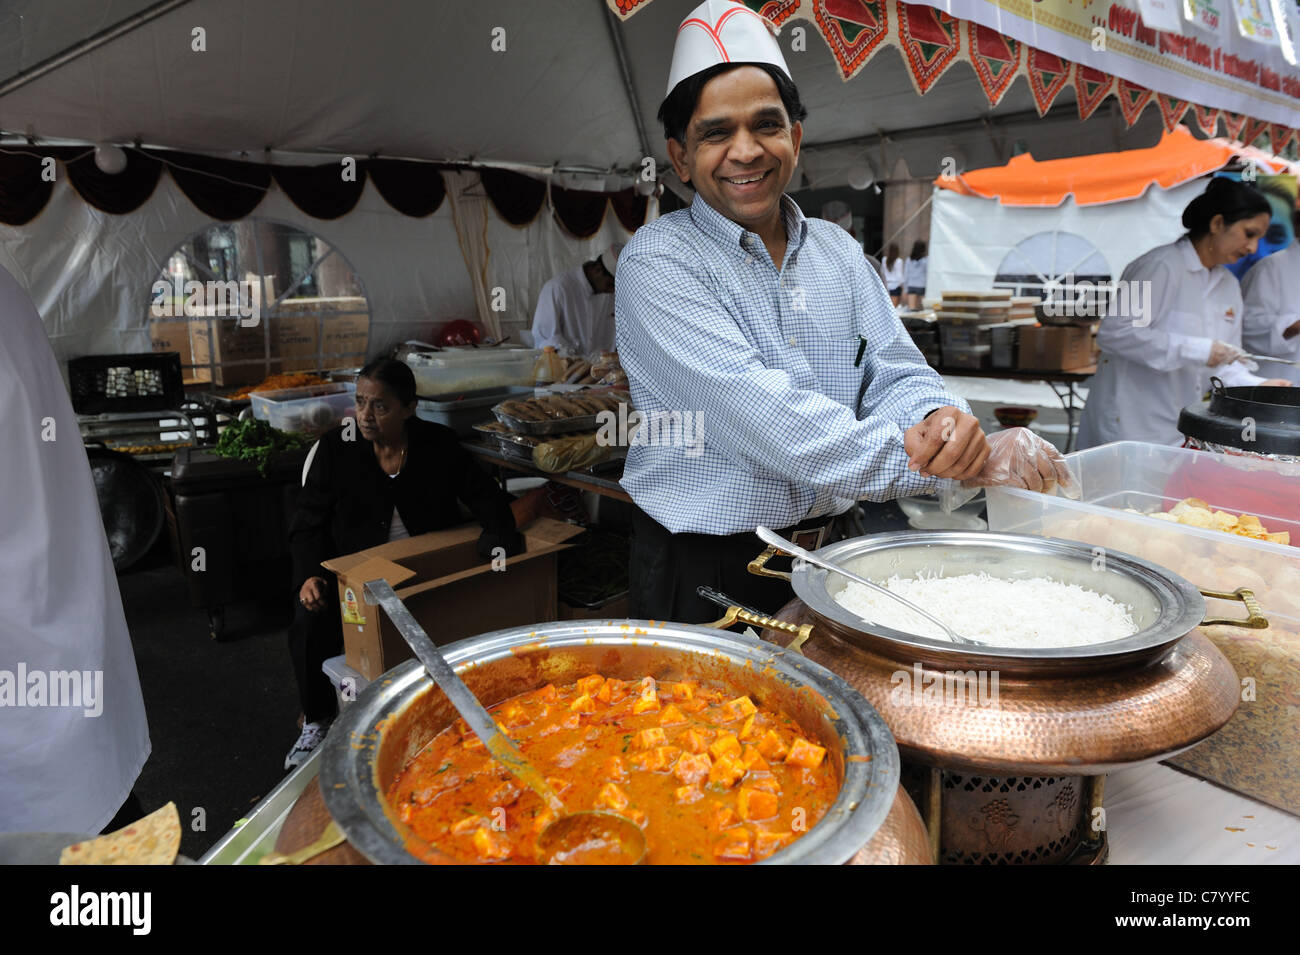 An Indian food vendor at a street fair in Lower Manhattan. Oct. 2, 2011 Stock Photo